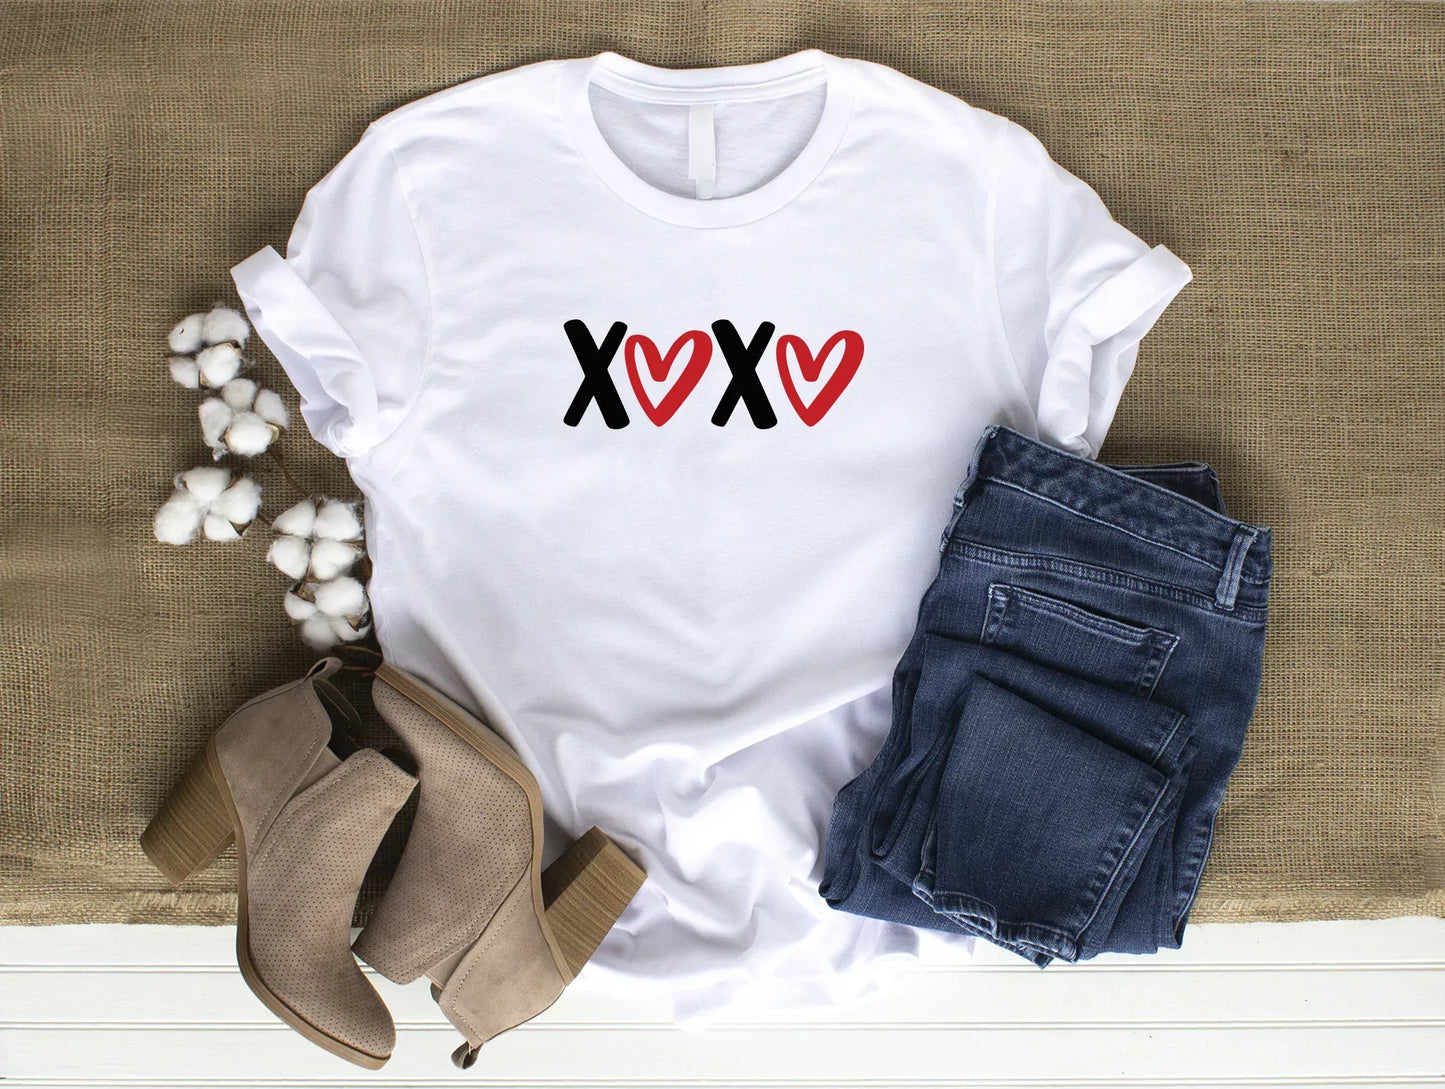 XOXO Plain Cute Comfy Valentine's Day White T-Shirt XL